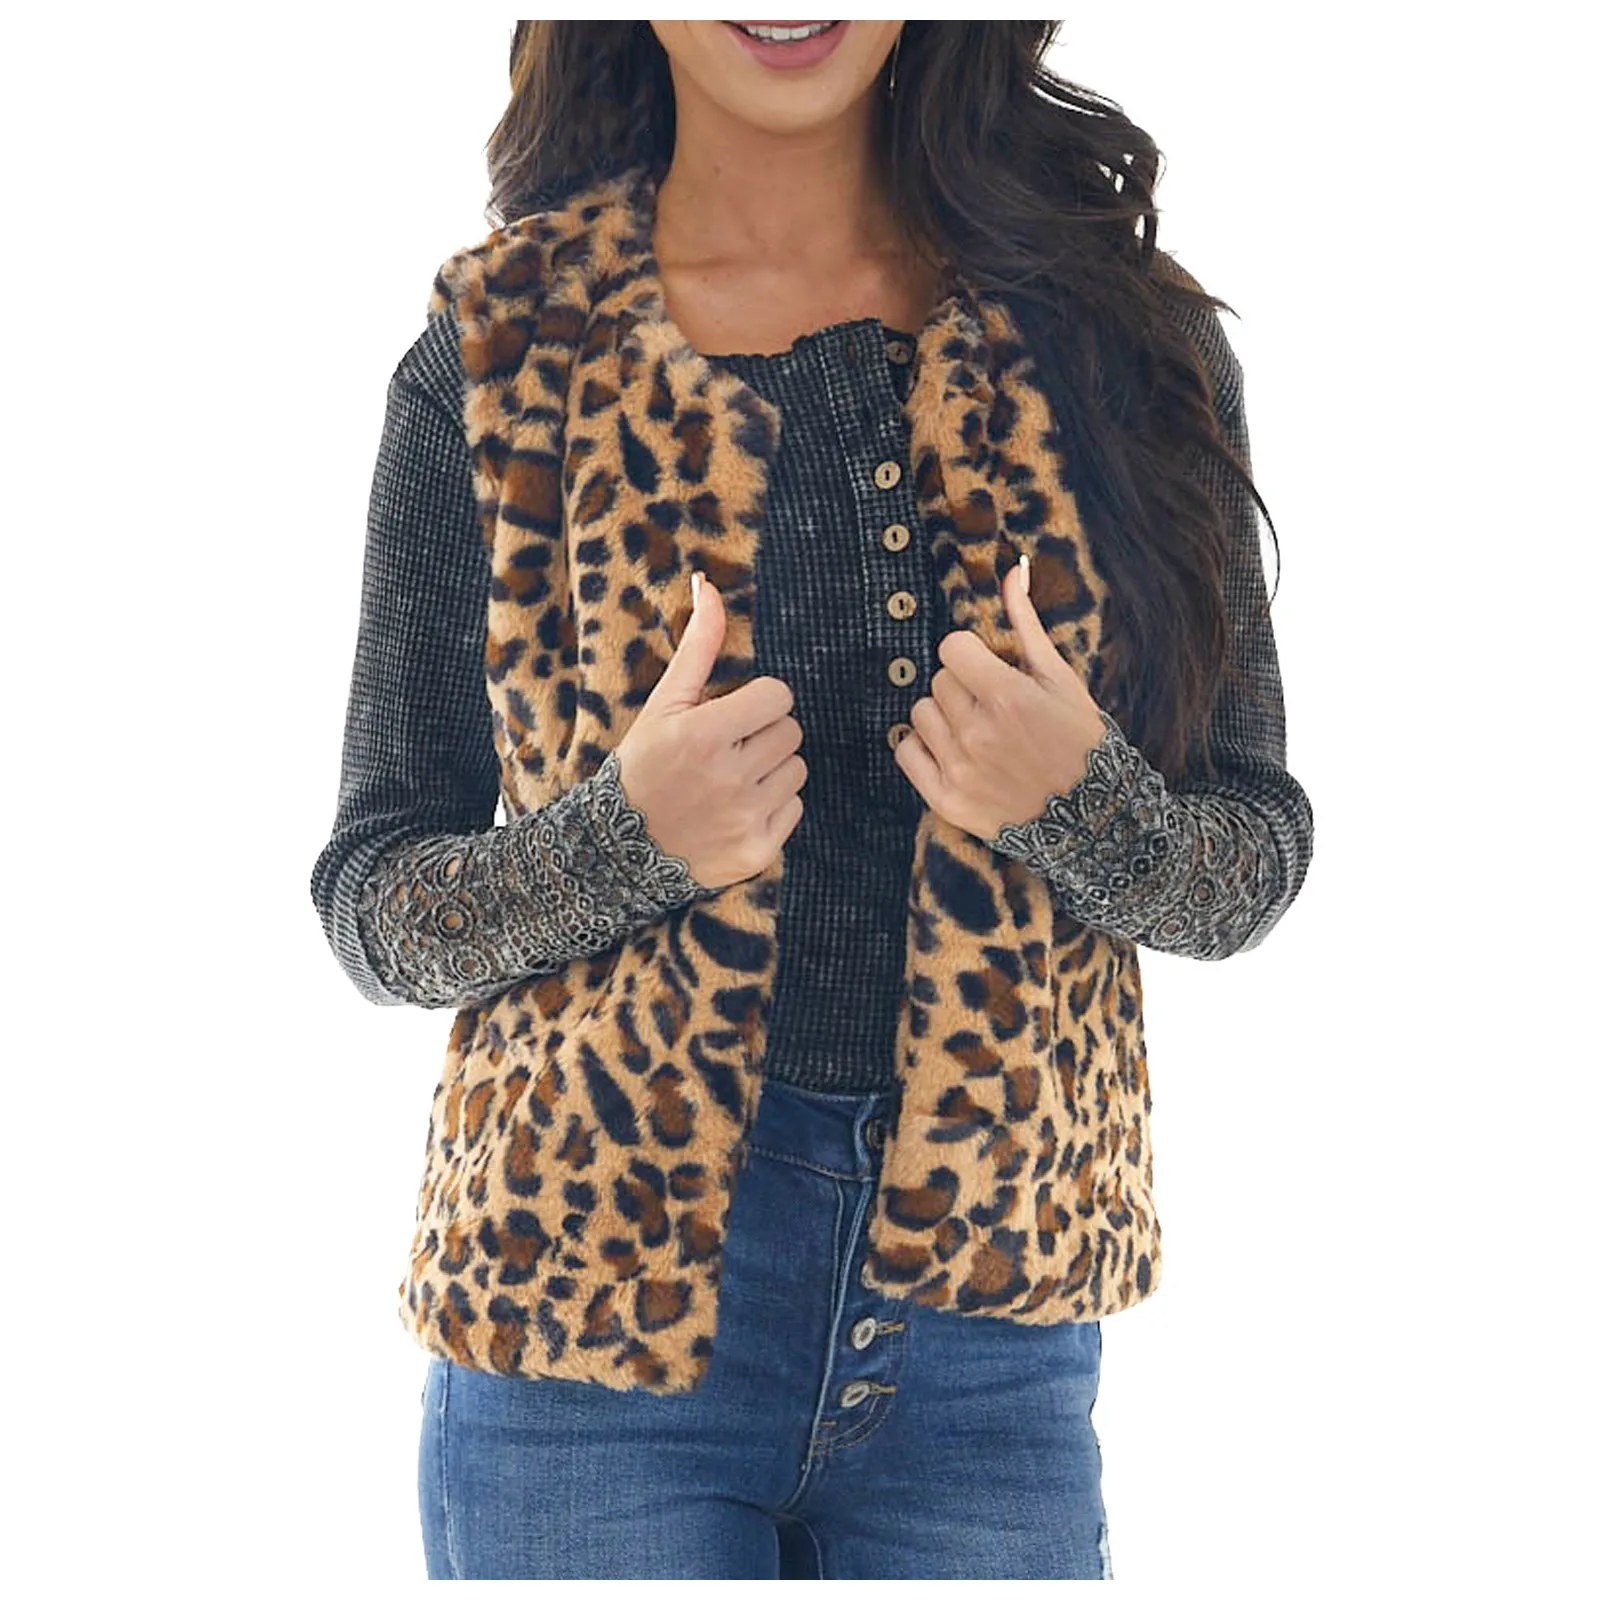 Fashion Sleeveless Leopard Jackets For Women Casual Loose O Neck Jackets  Cardigan For Women 2021 New Women Clothings chaquetas|Jackets| - AliExpress